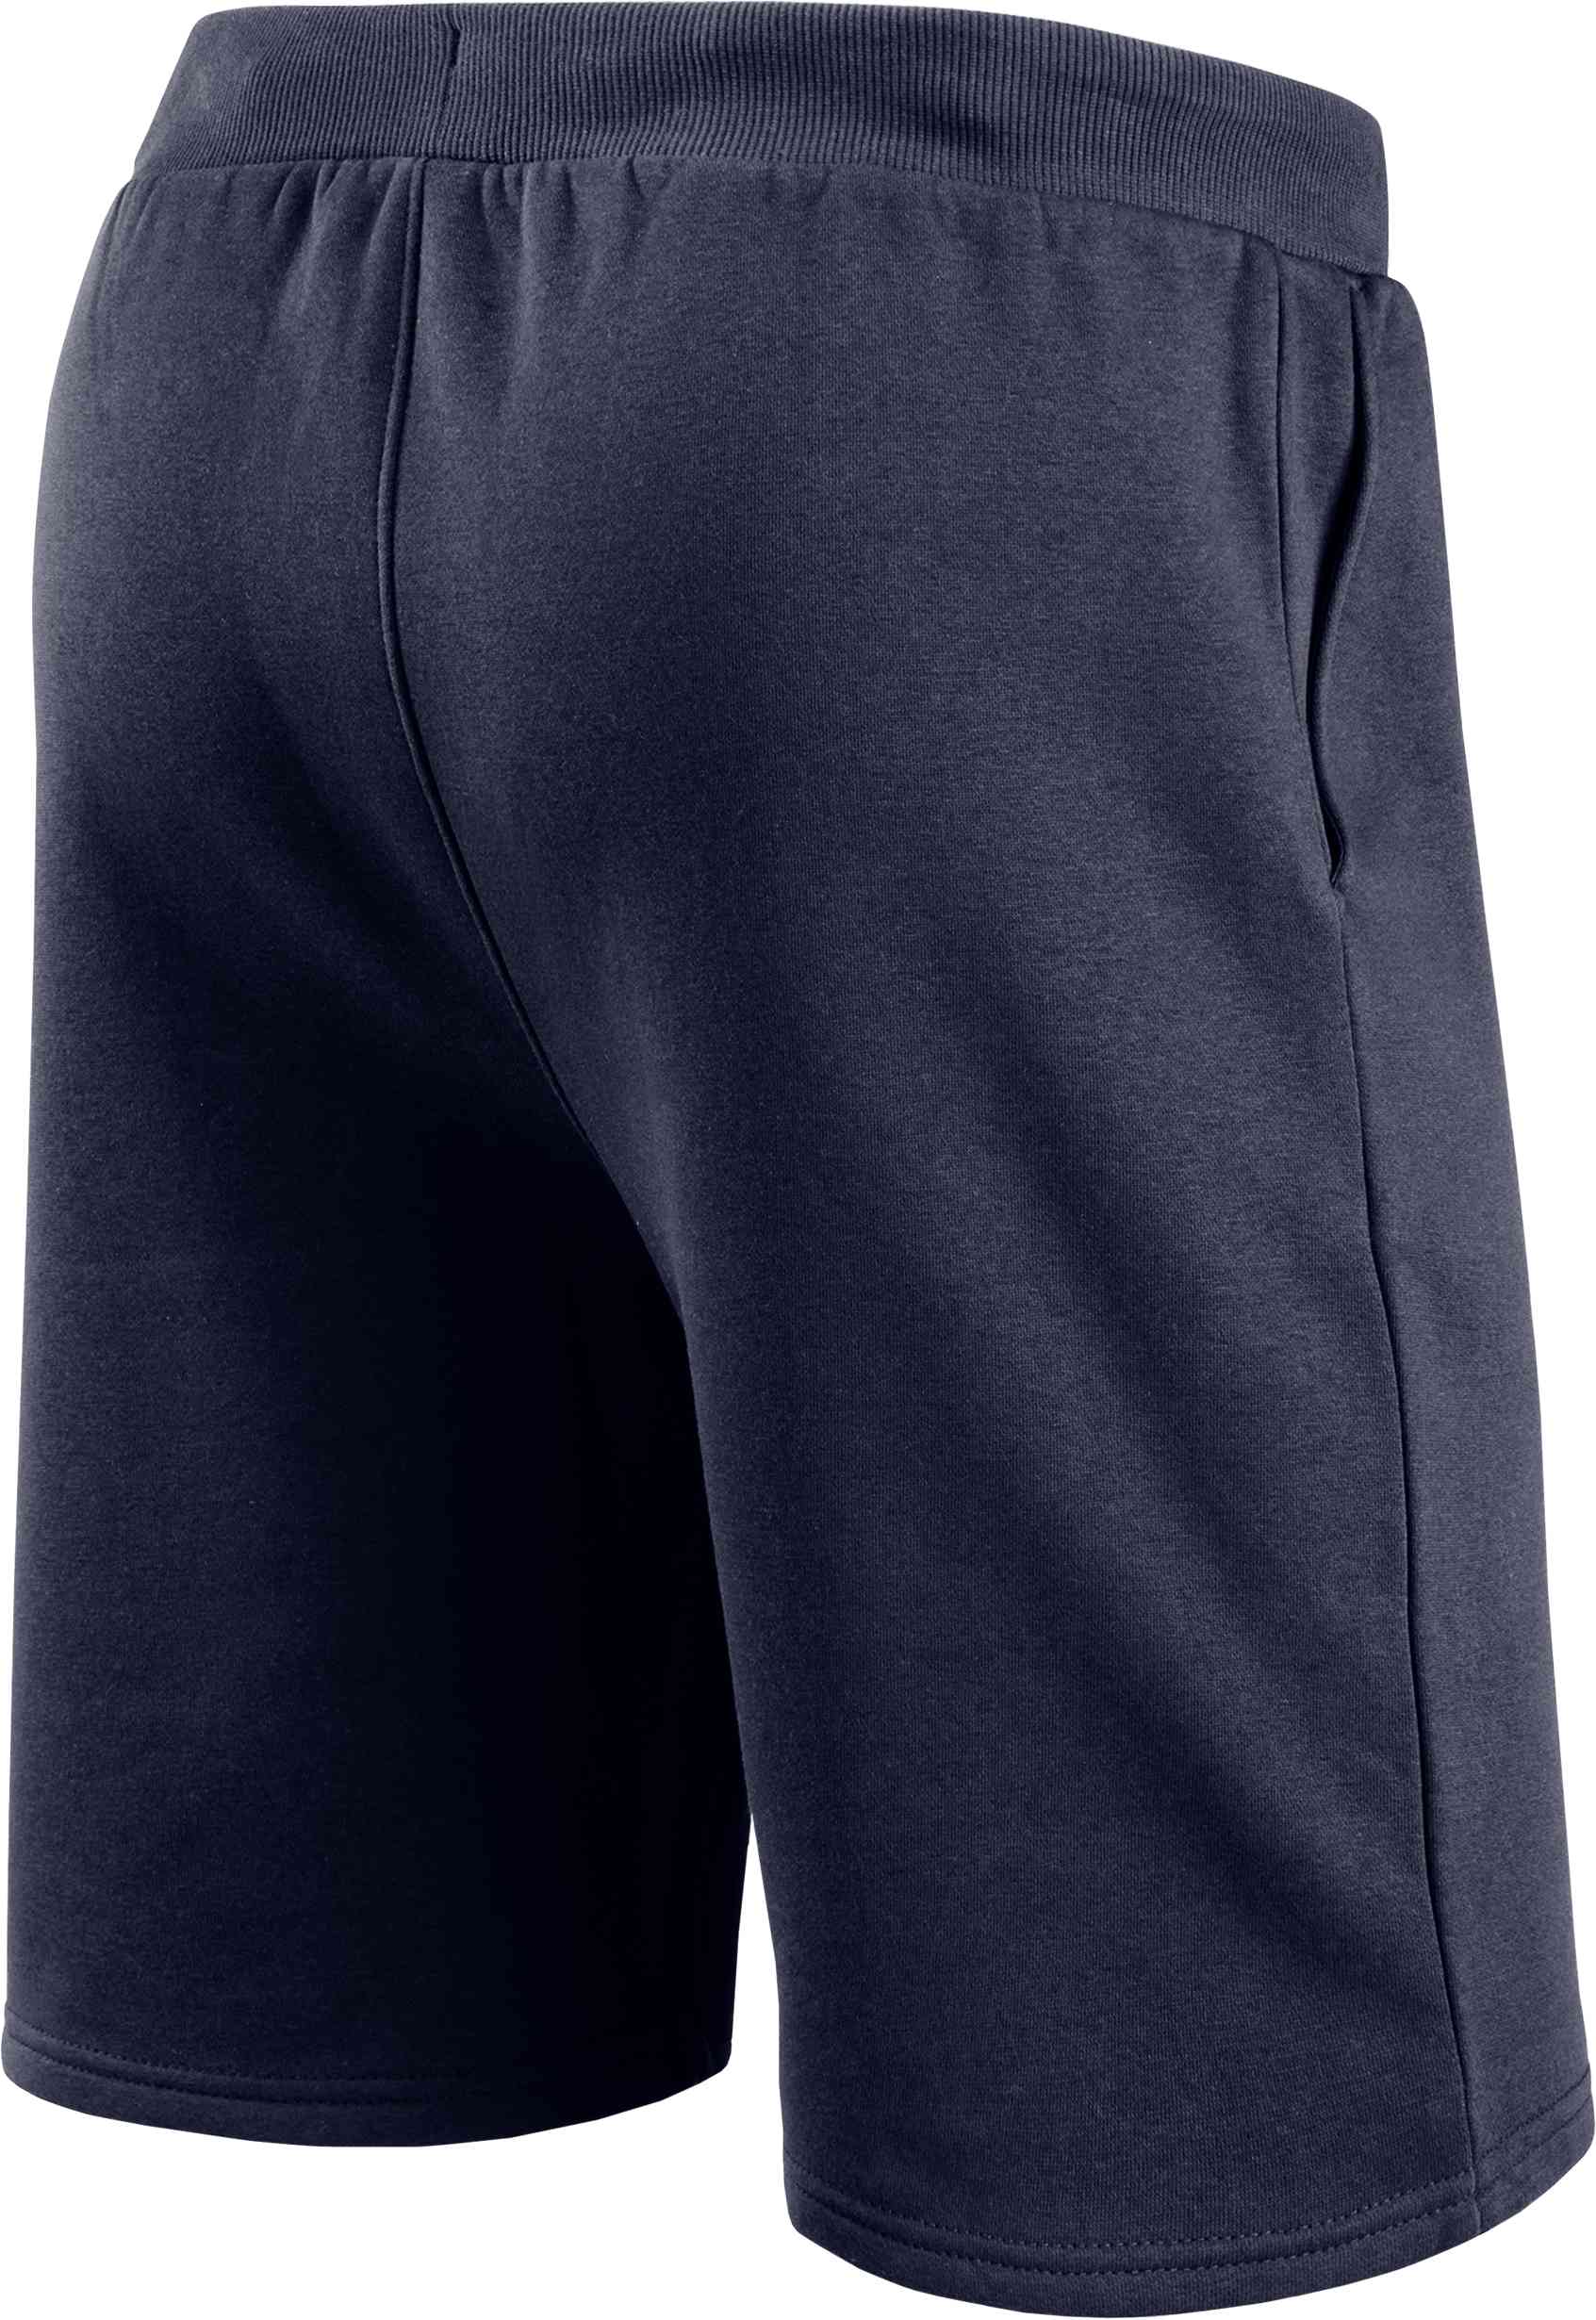 Fanatics - NFL New England Patriots Primary Logo Fleece Shorts